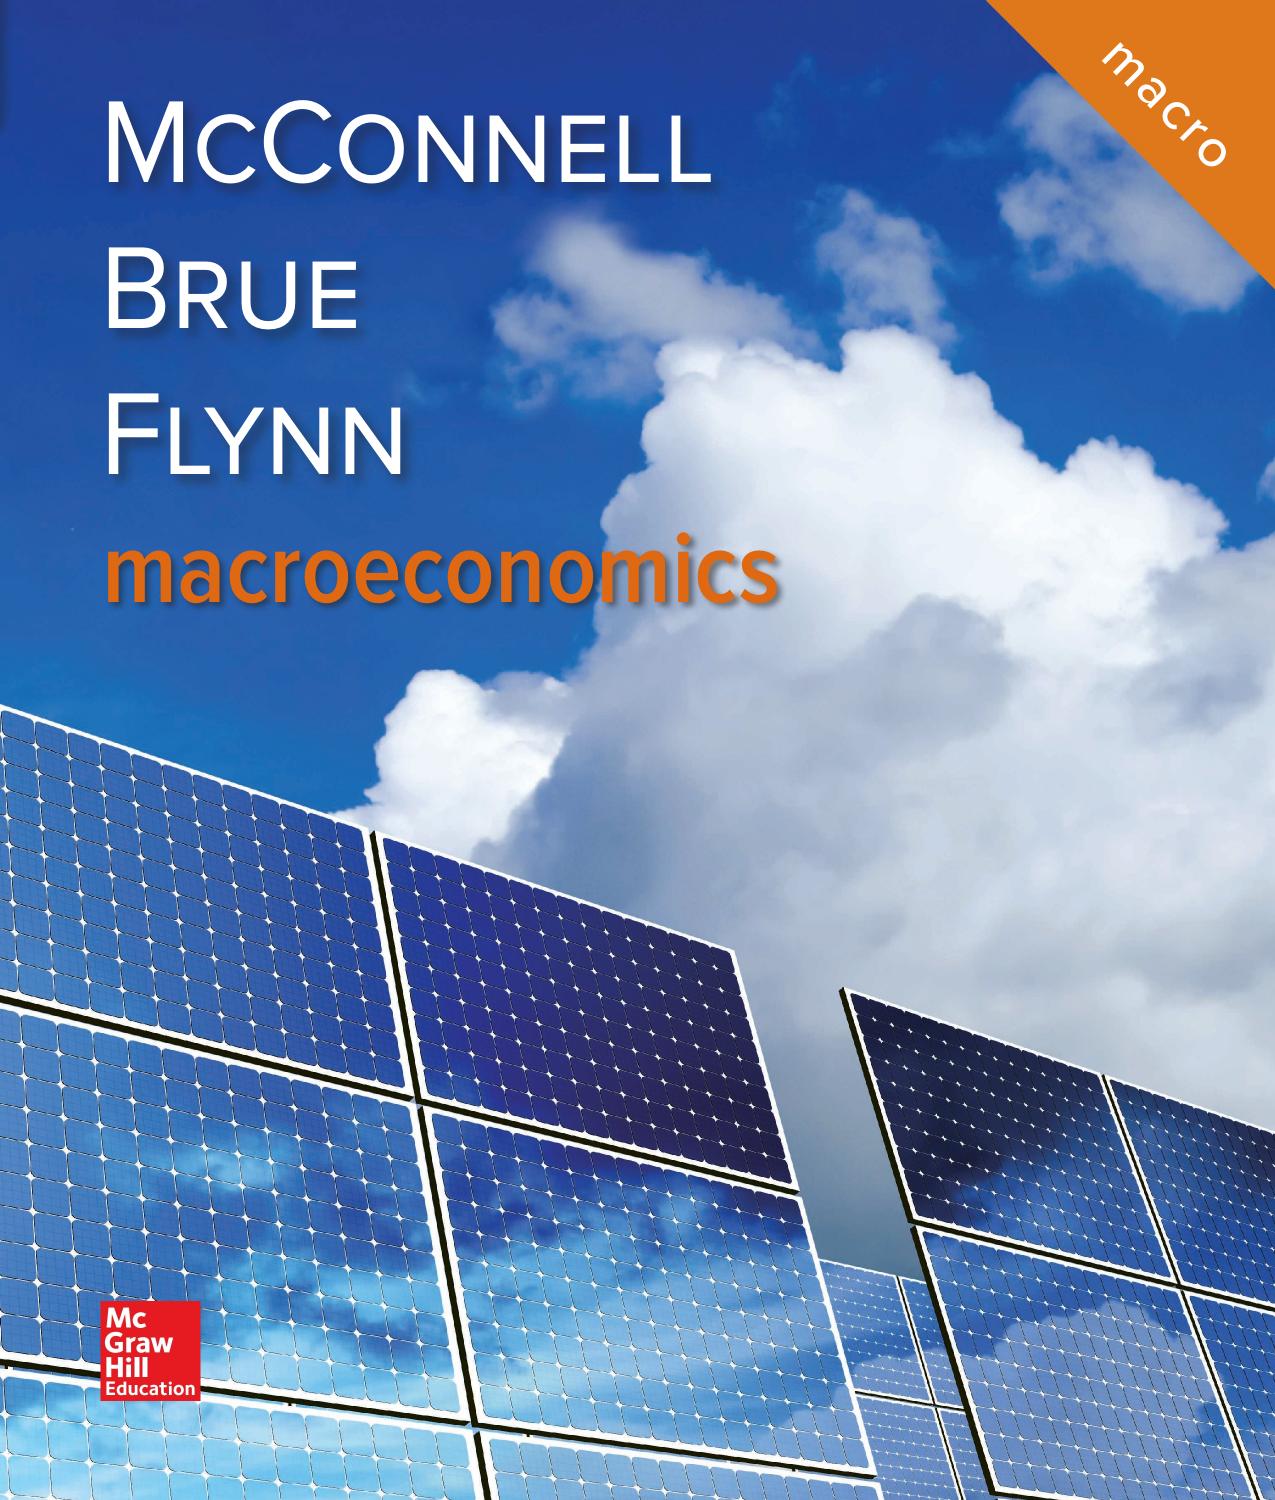 Macroeconomics: PRINCIPLES, PROBLEMS, AND POLICIES; Twenty-First Edition